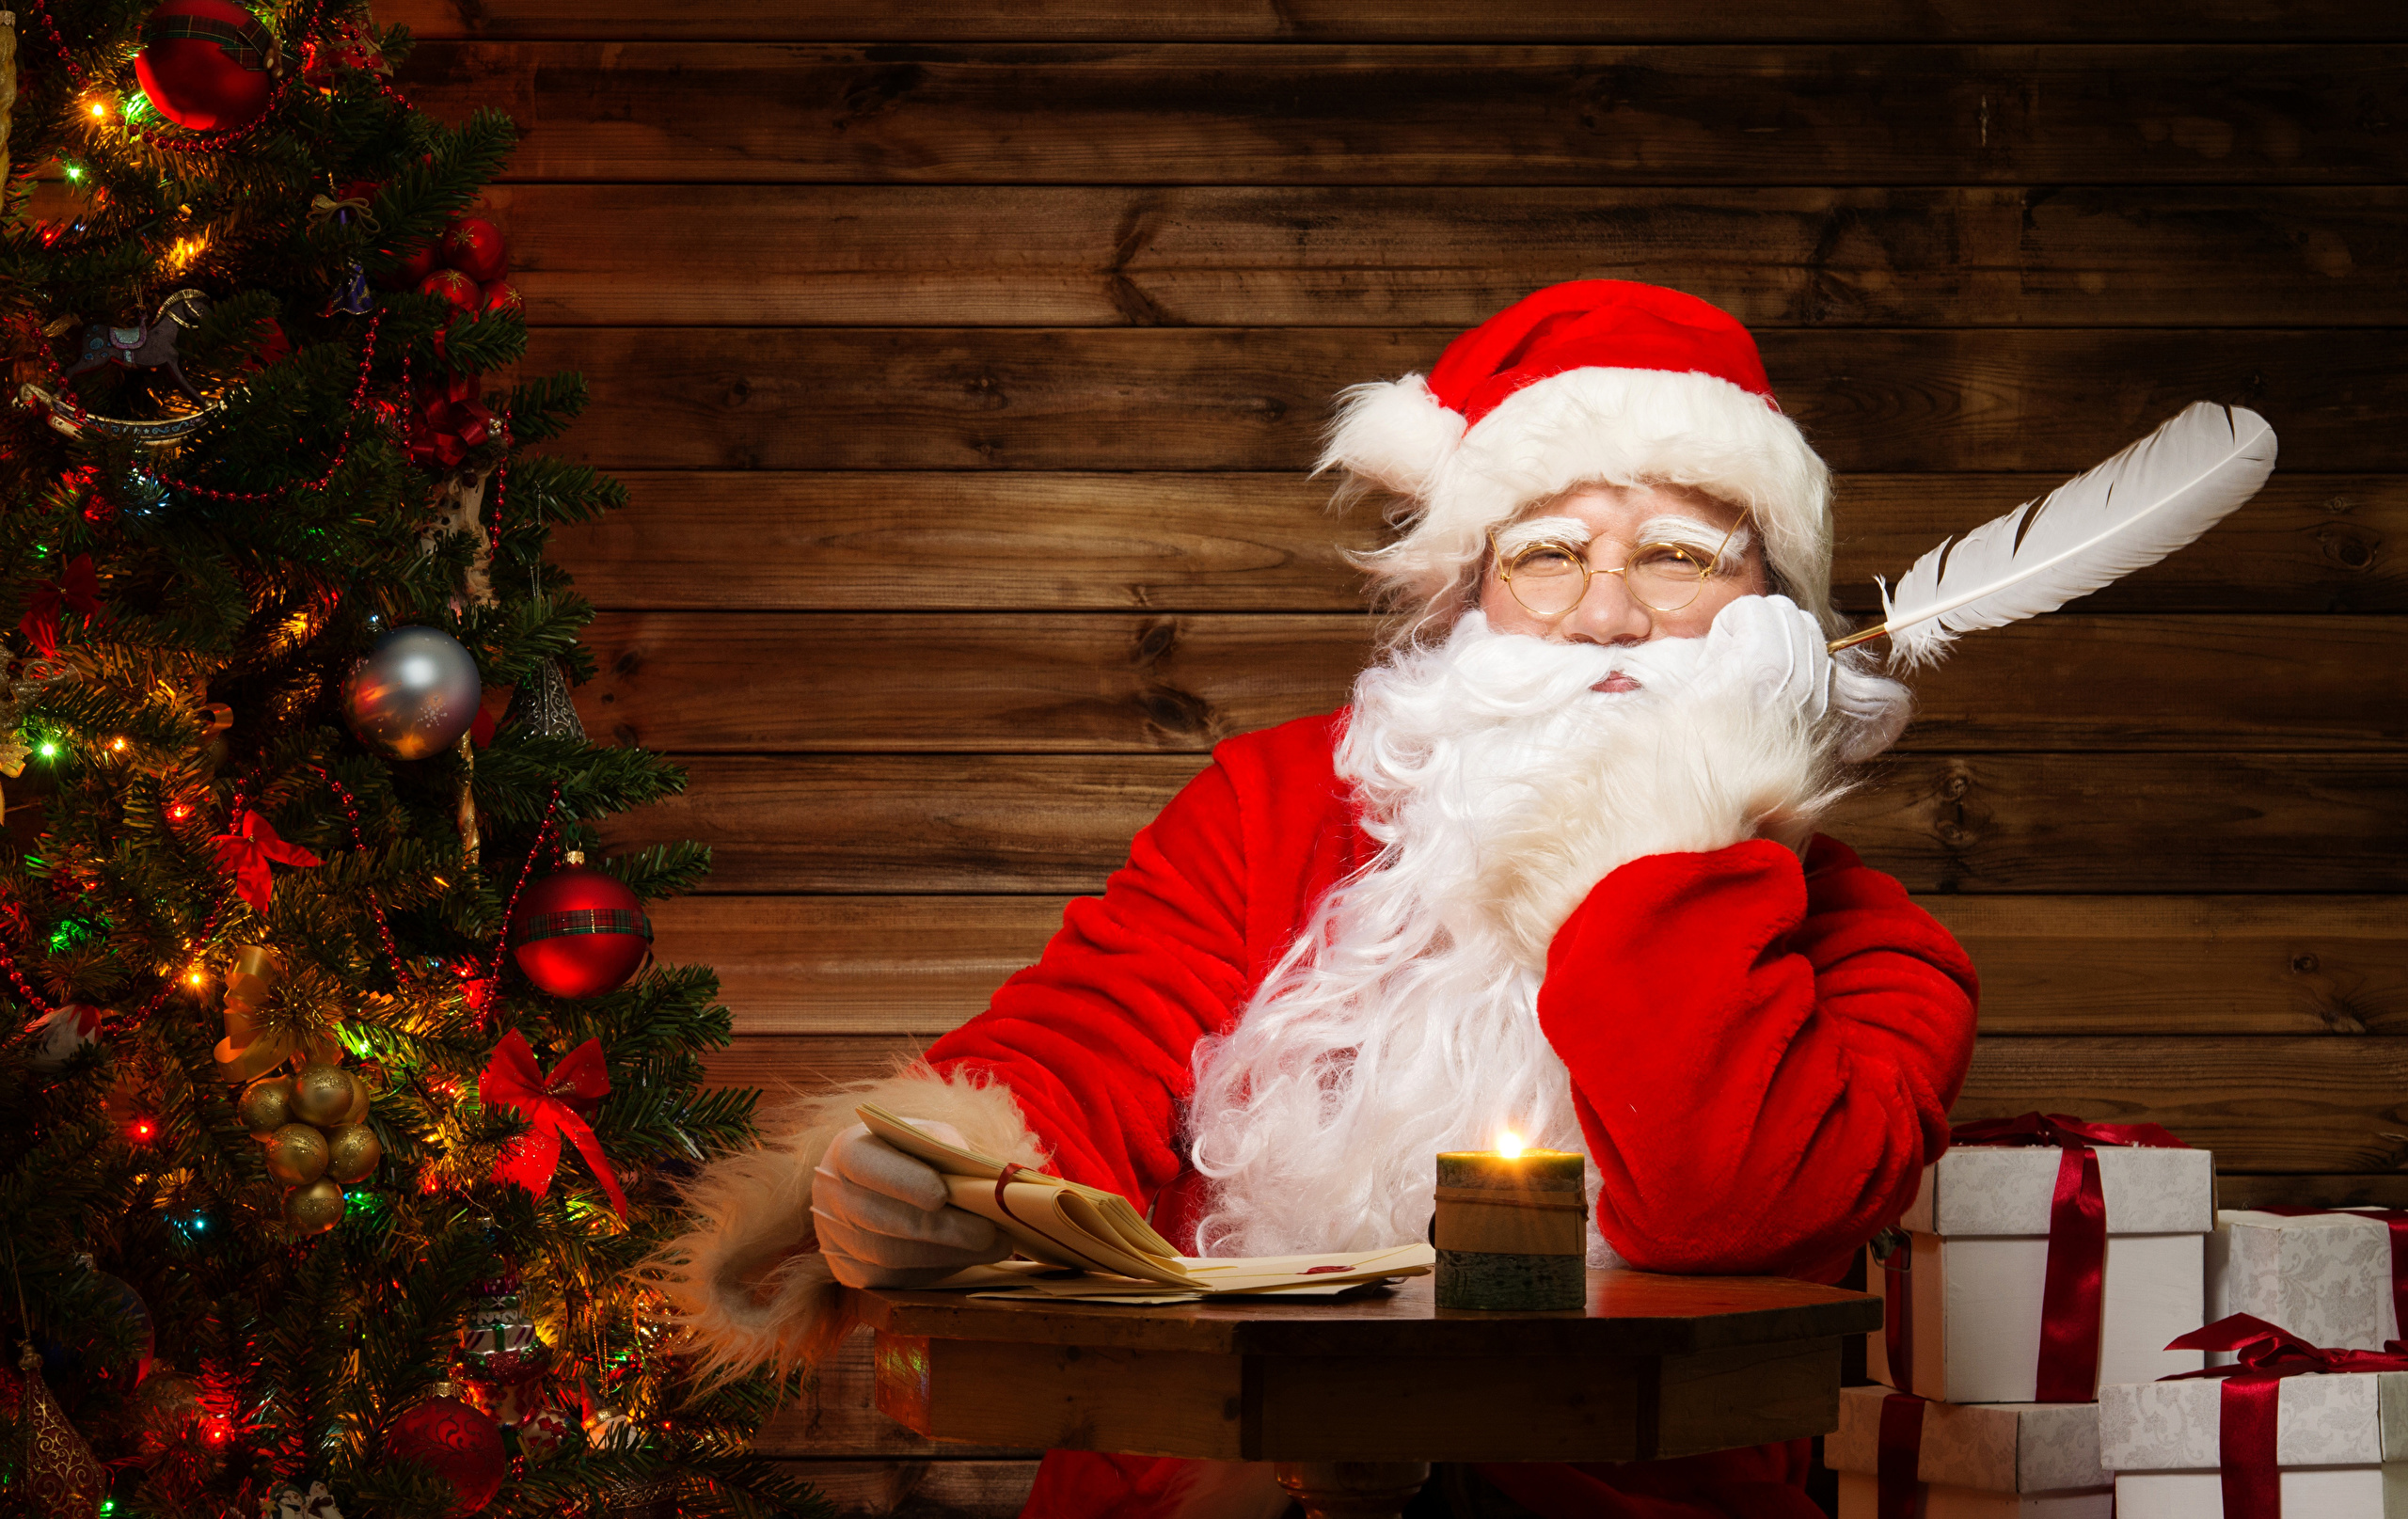 Baixar papel de parede para celular de Papai Noel, Natal, Feriados gratuito.